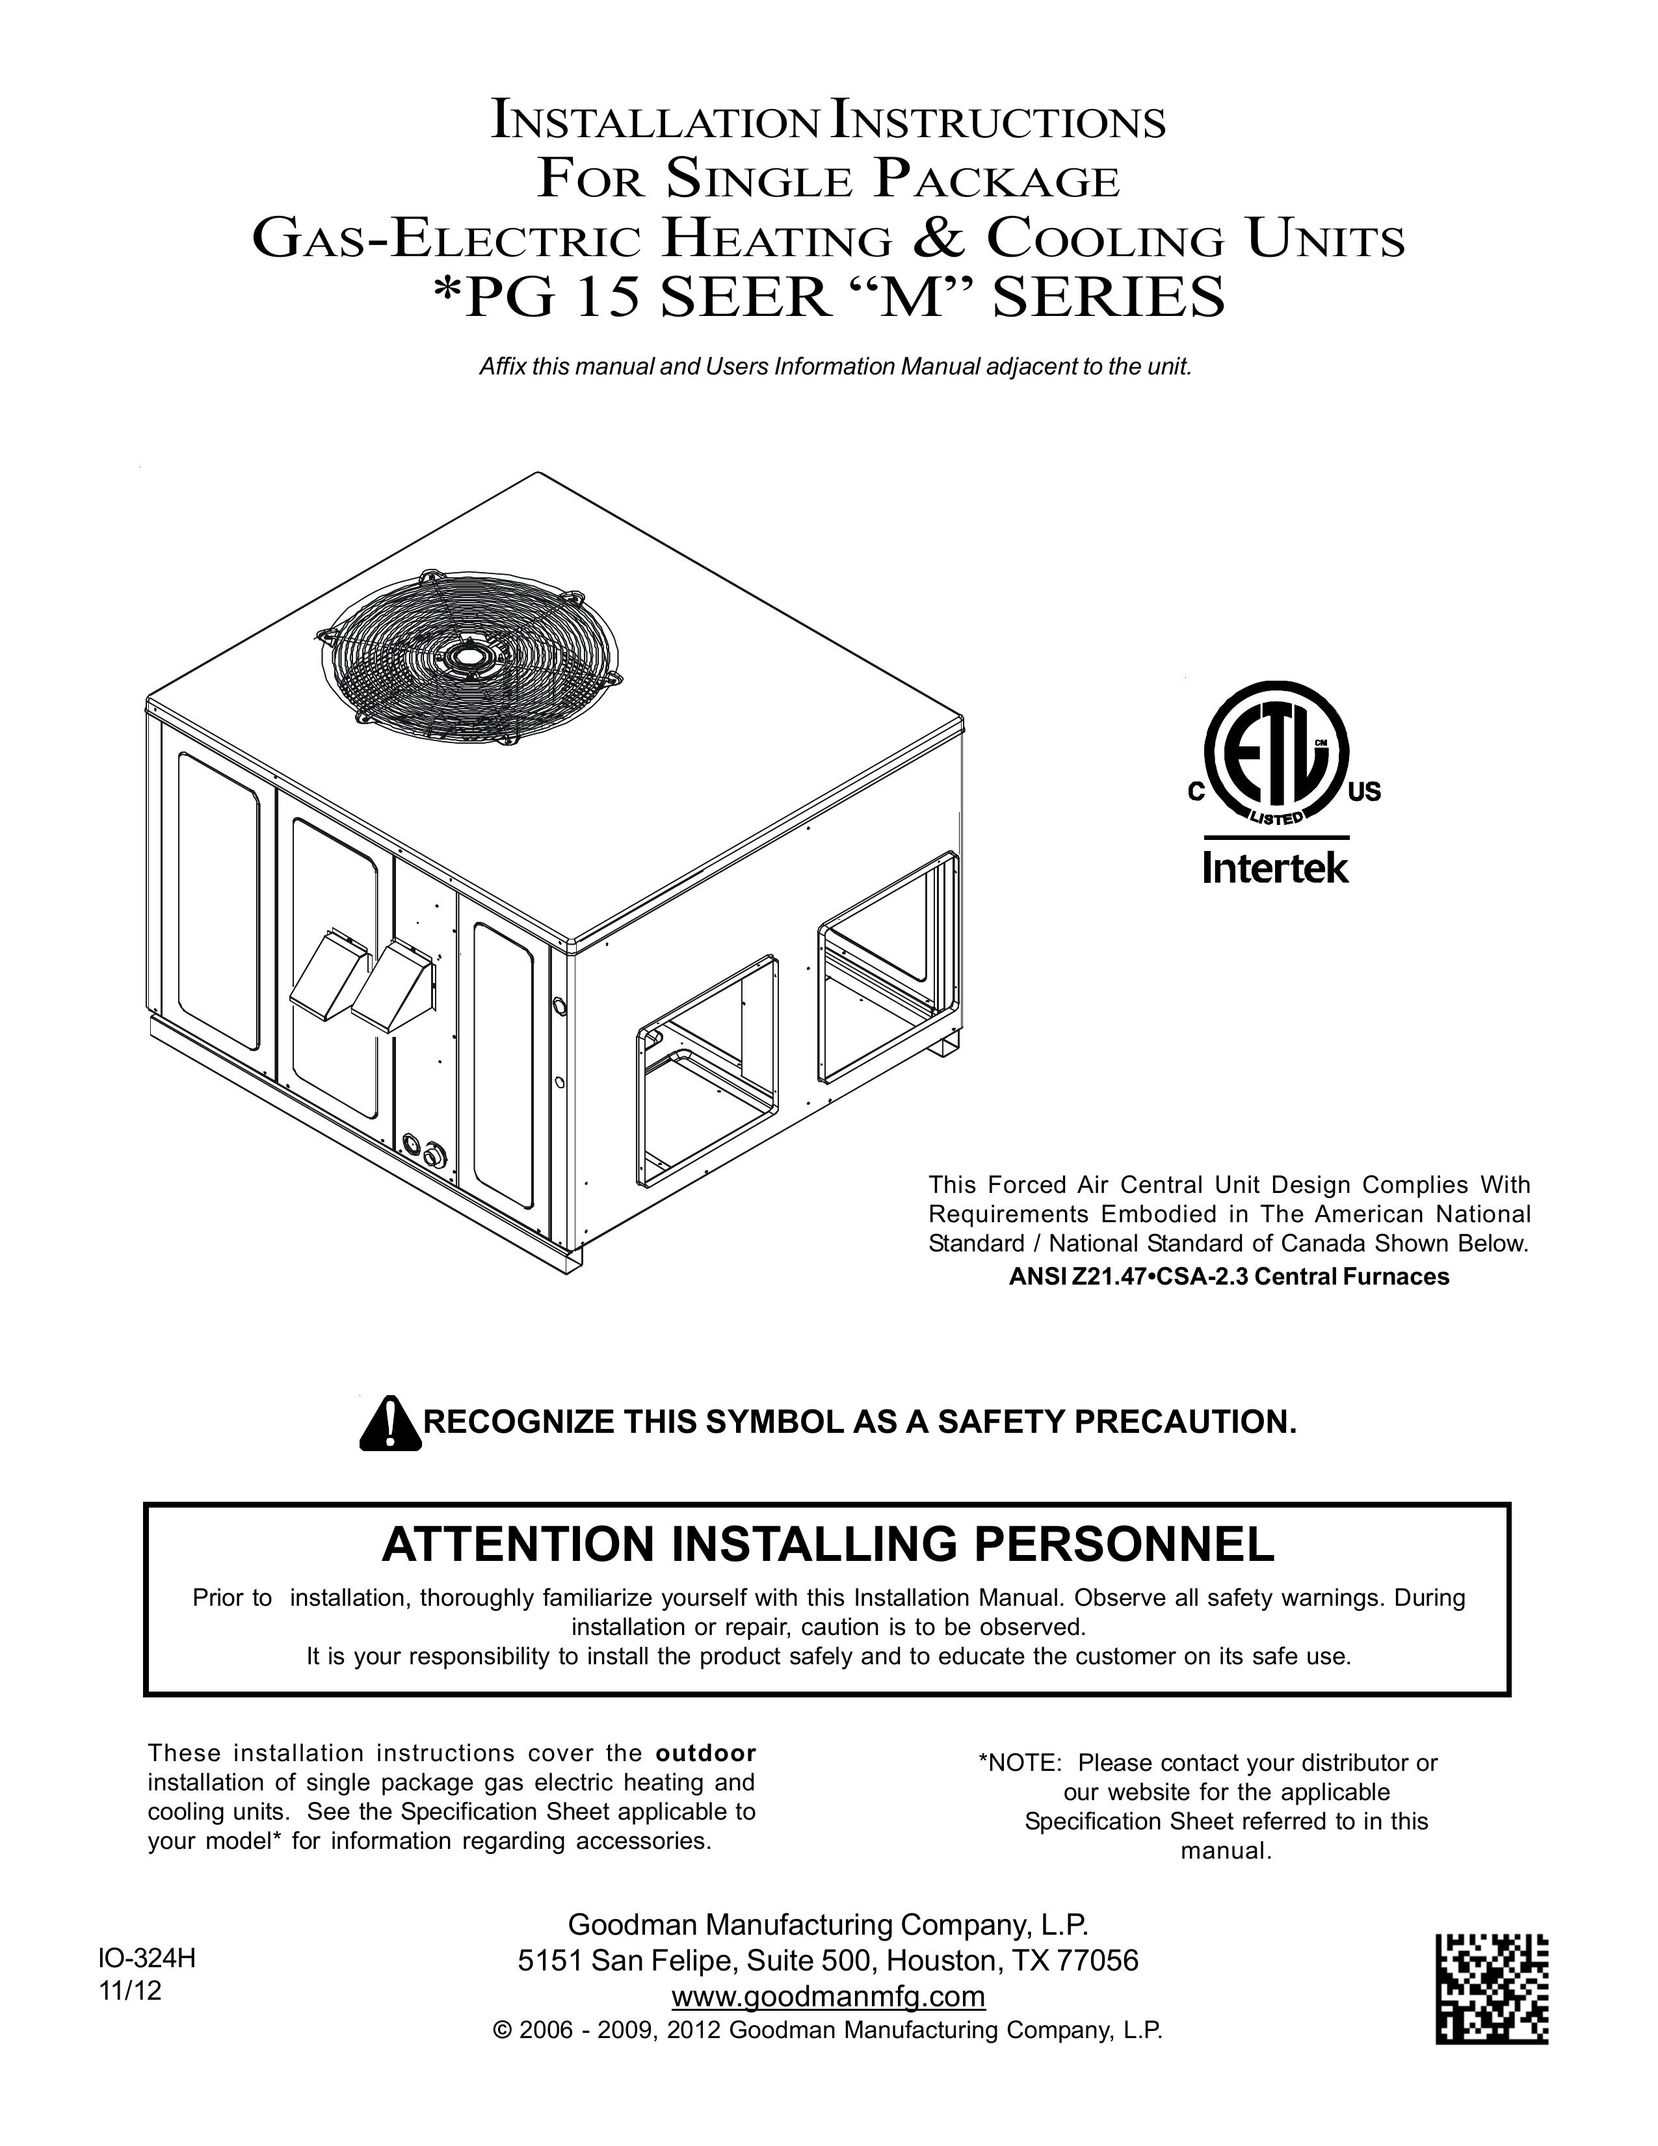 Goodman Mfg PG 15 Heating System User Manual